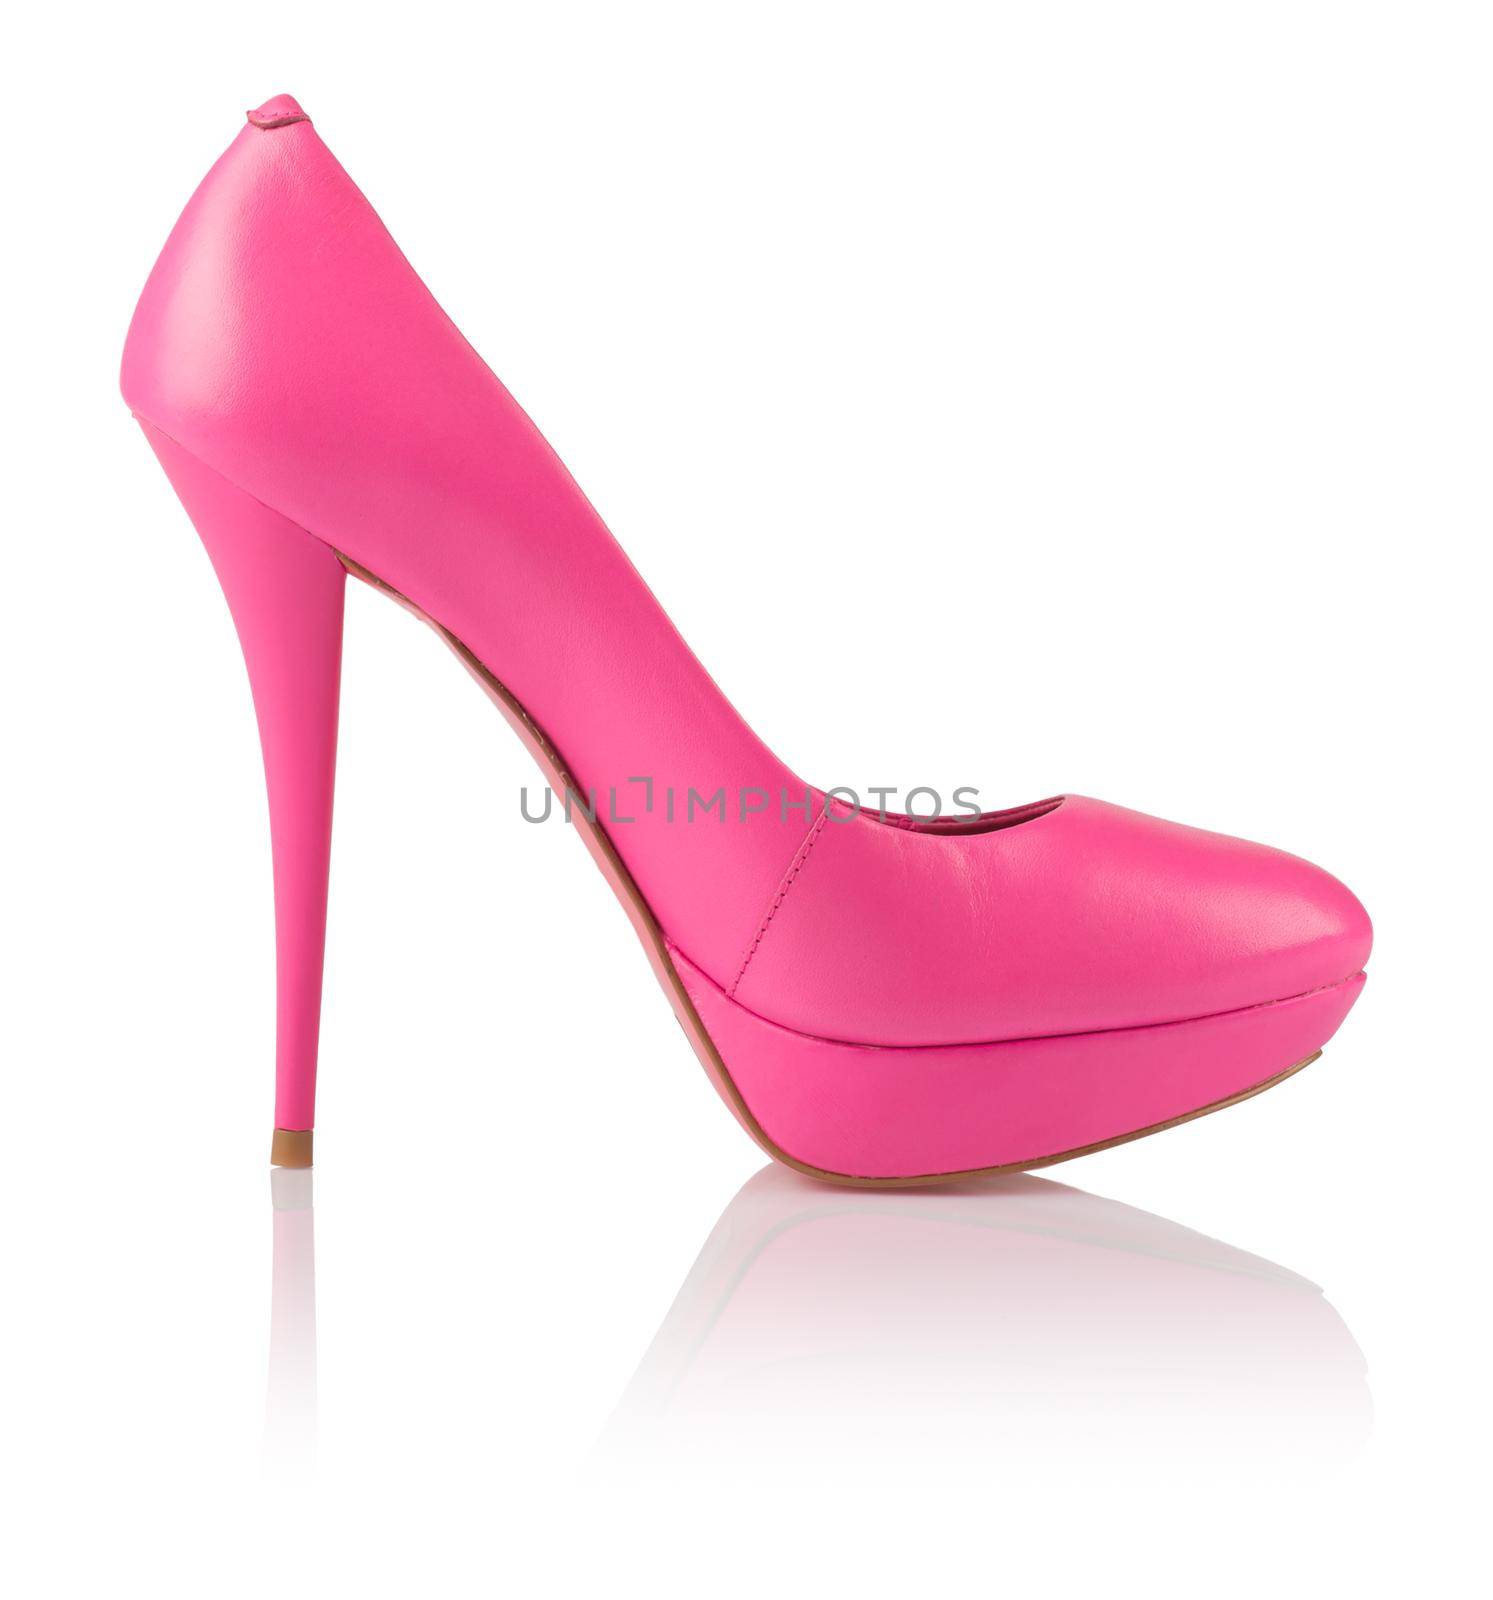 Fashionable pink women shoe by nikitabuida